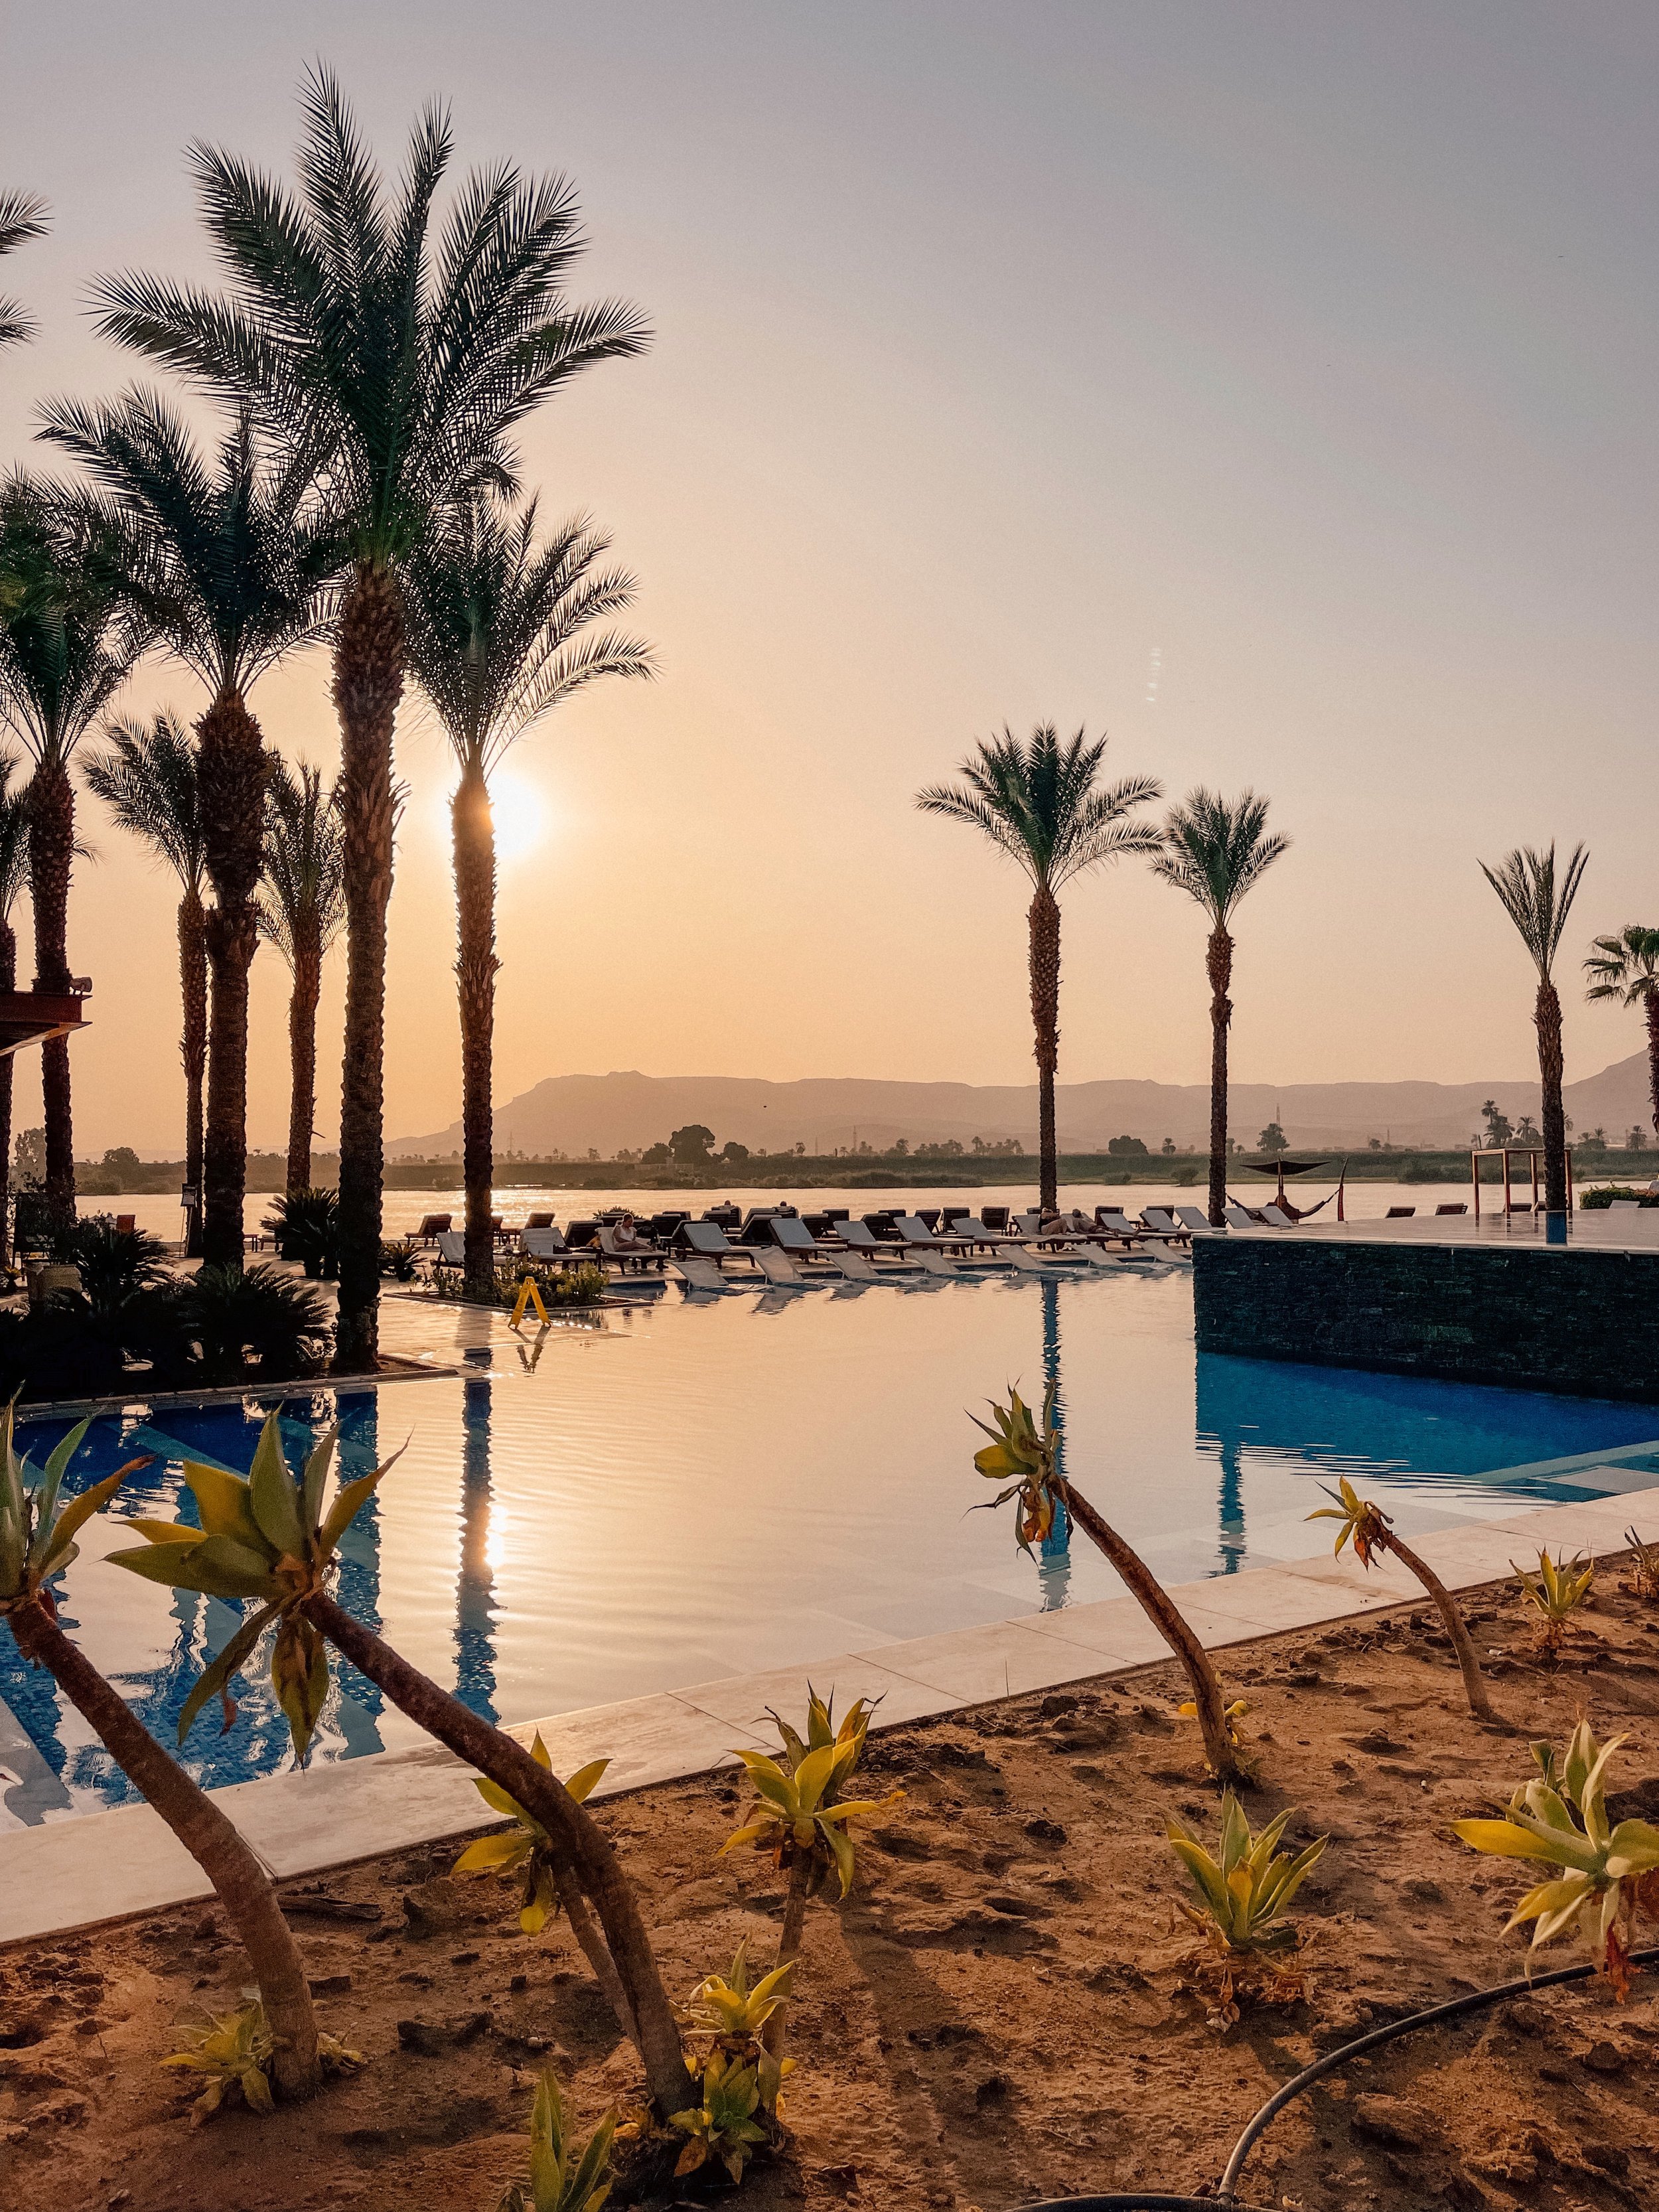 Sunset at the Hilton Hotel - Luxor - Egypt